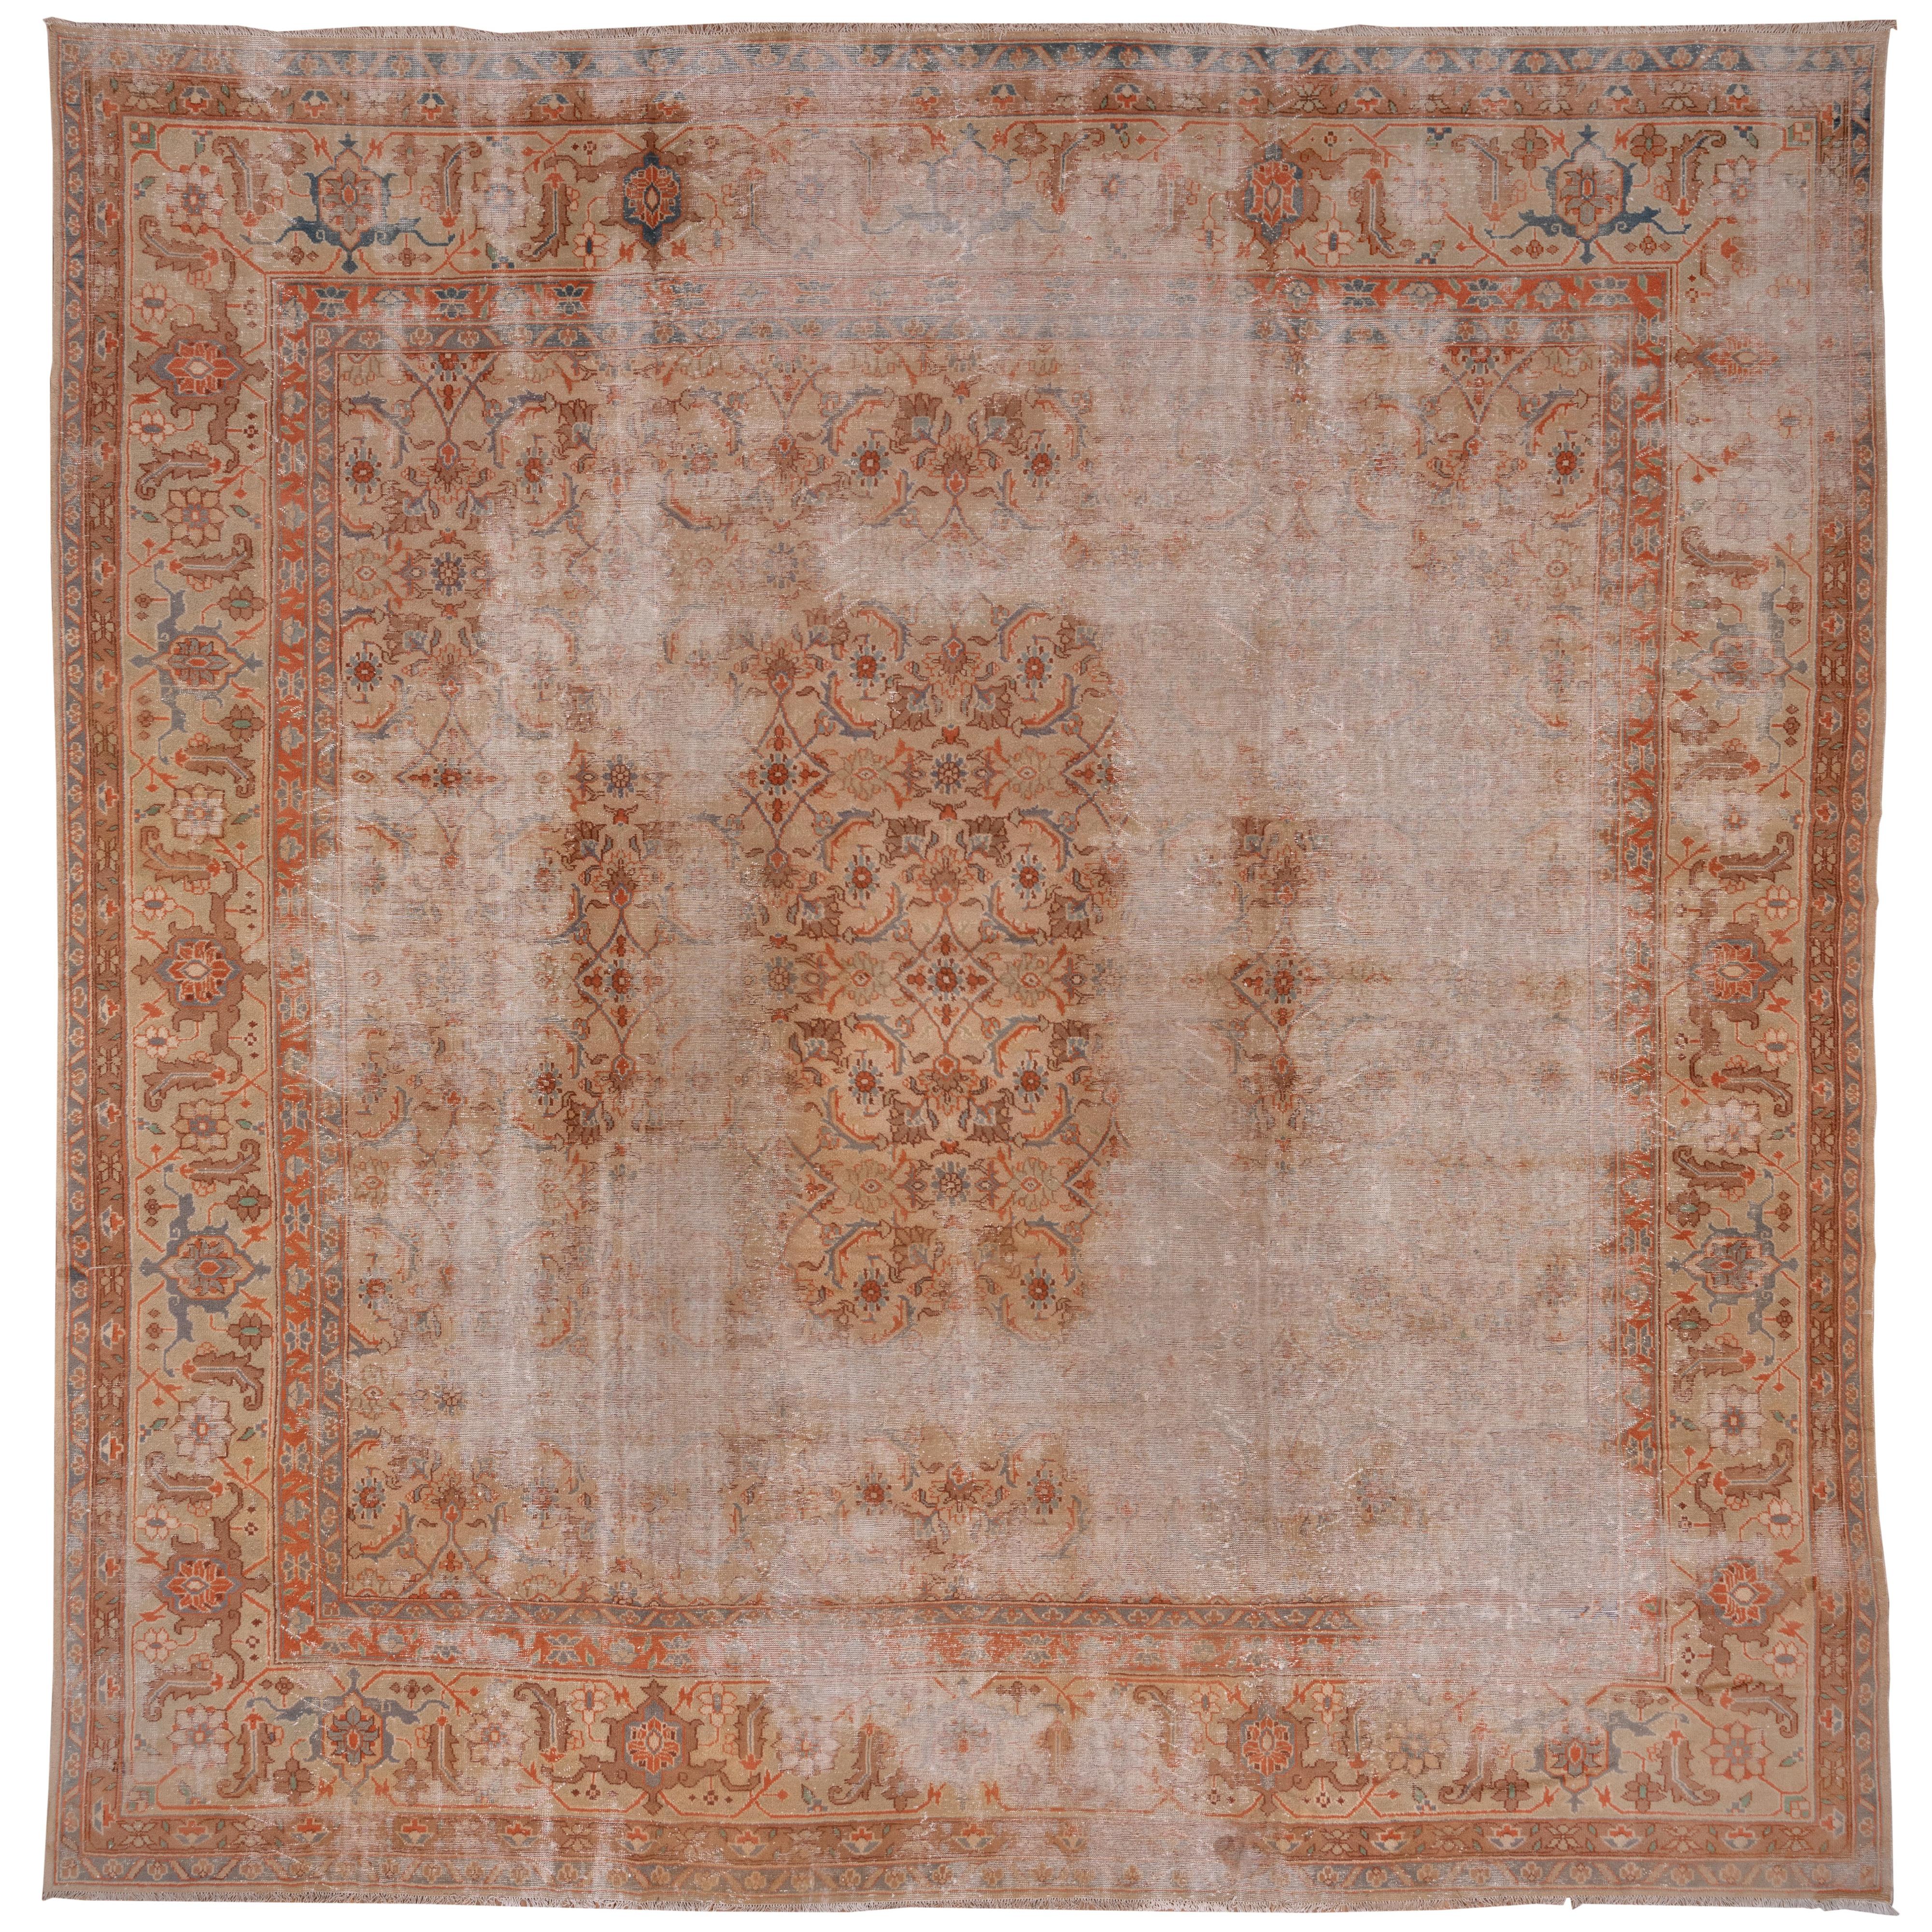 Antique Distressed Square Amritsar Carpet For Sale